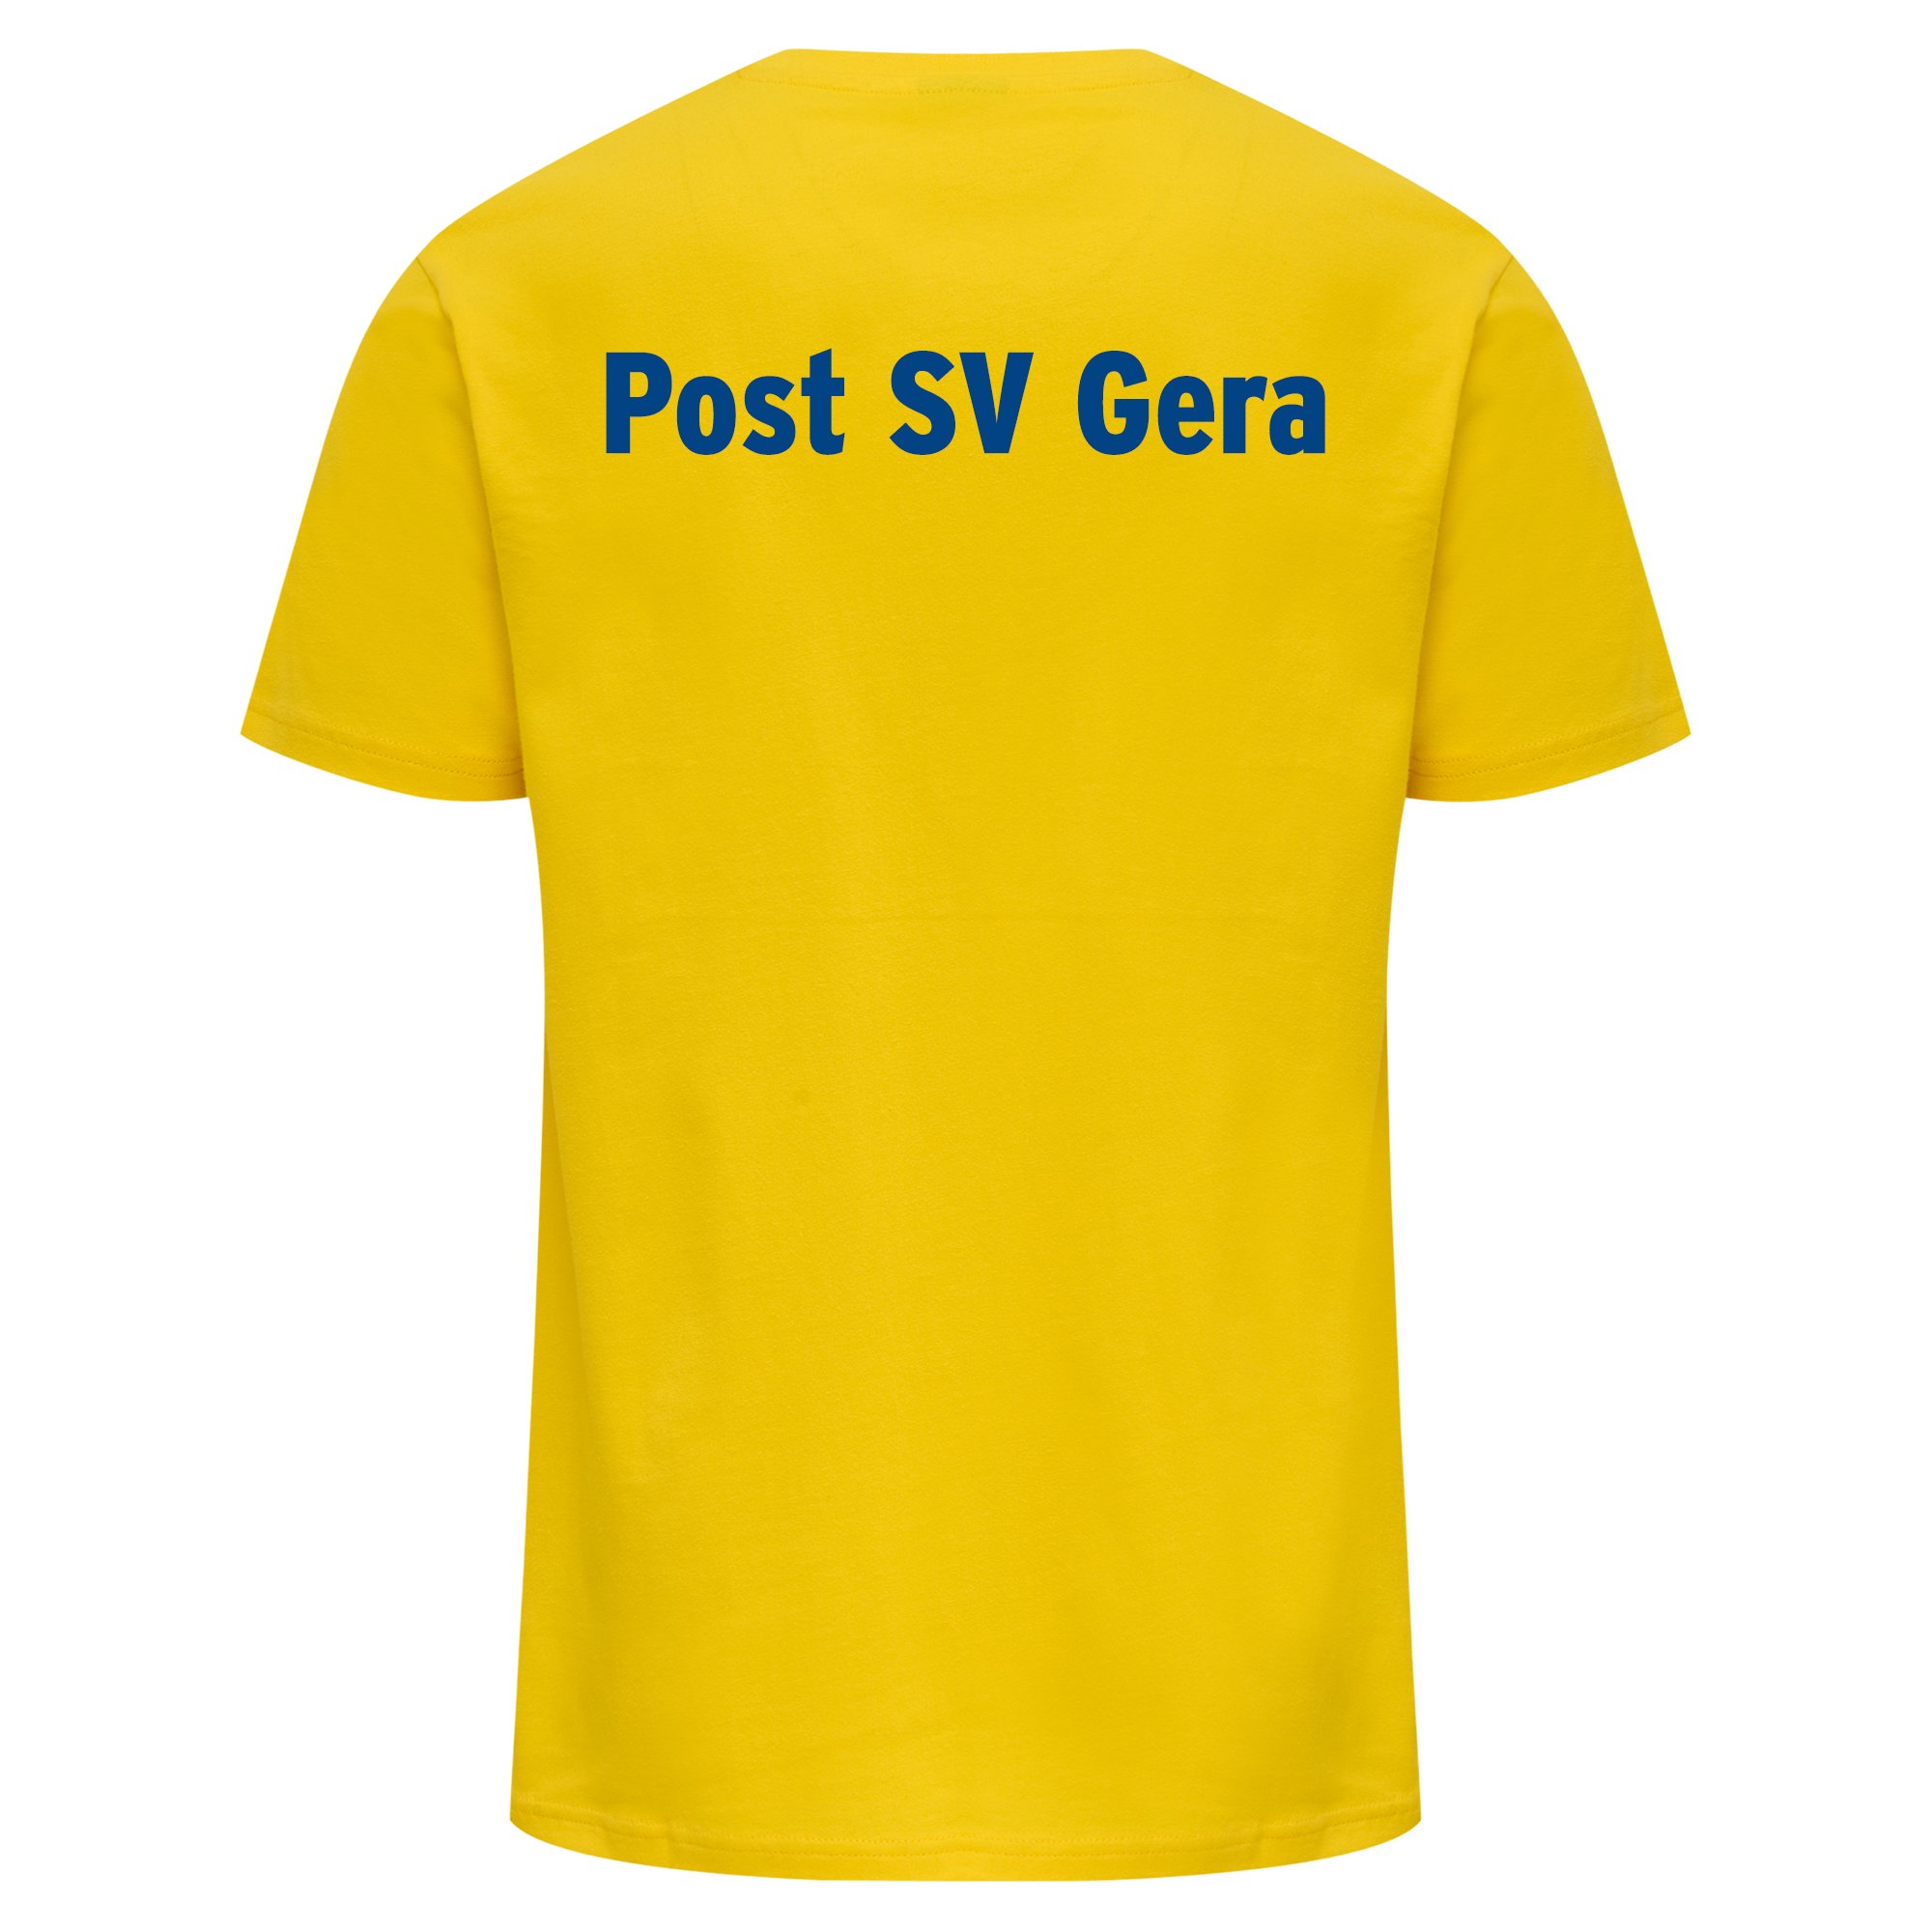 Post SV Gera T-Shirt